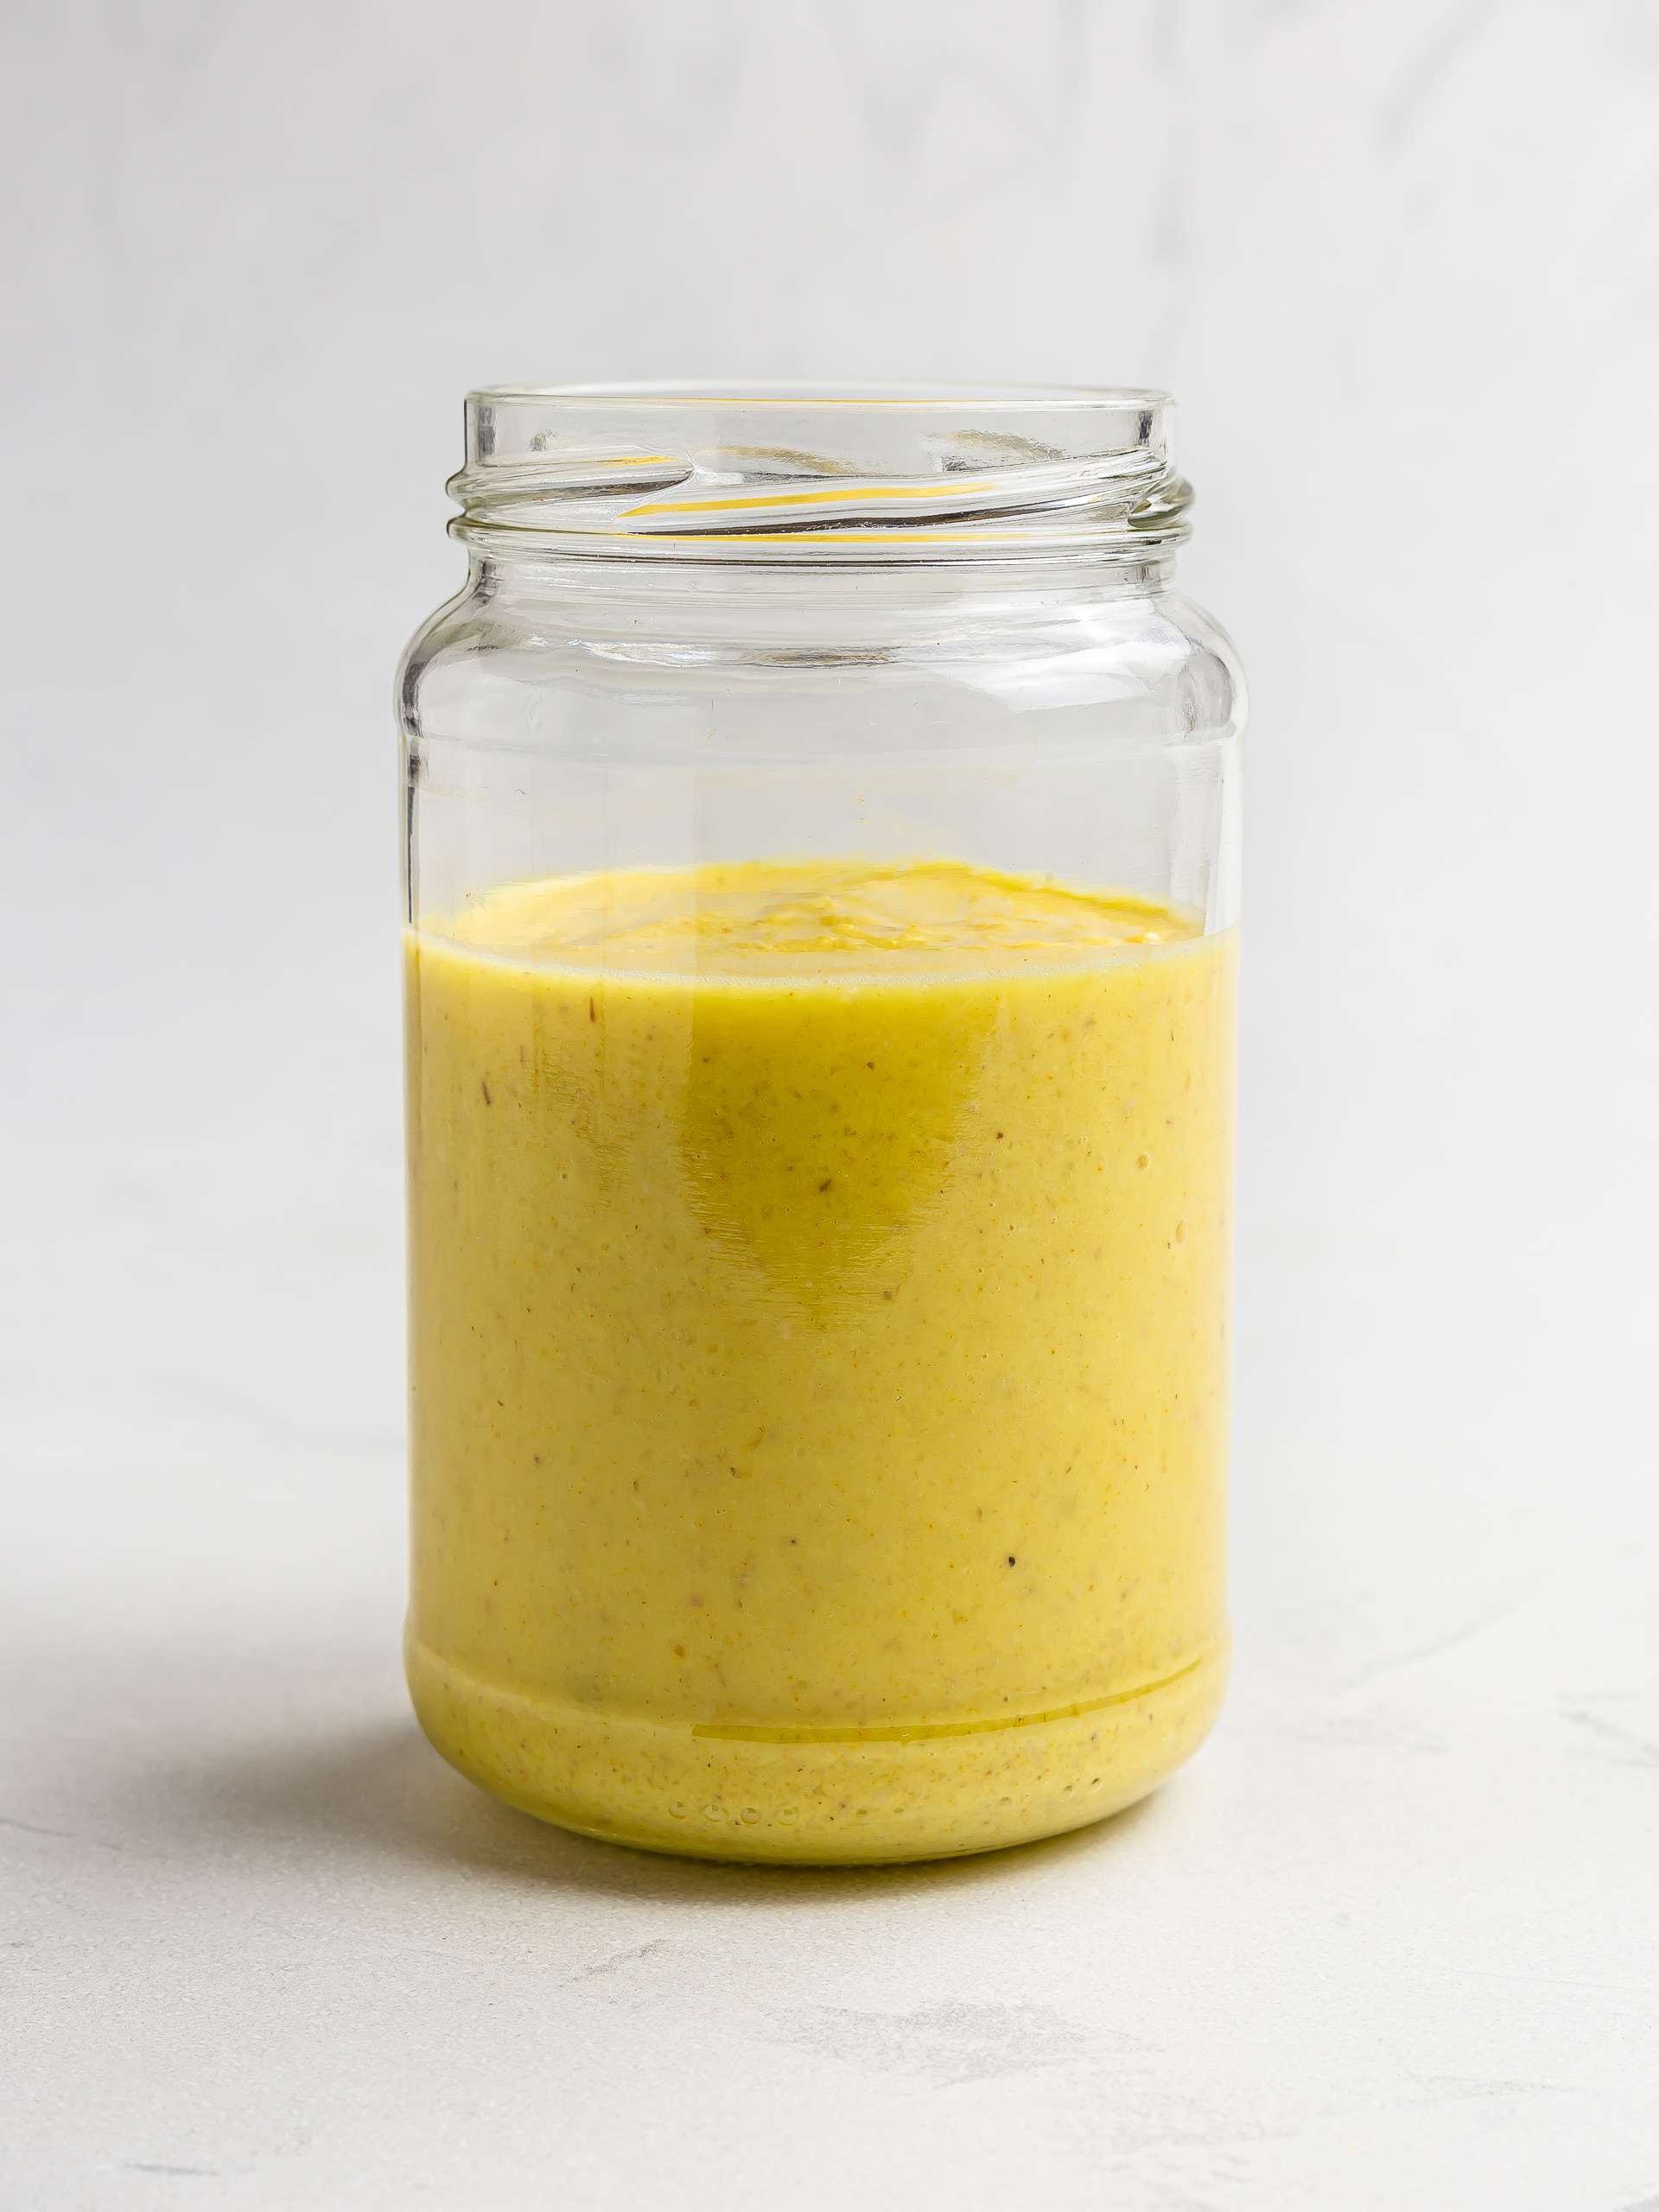 mango lassi oats in a jar